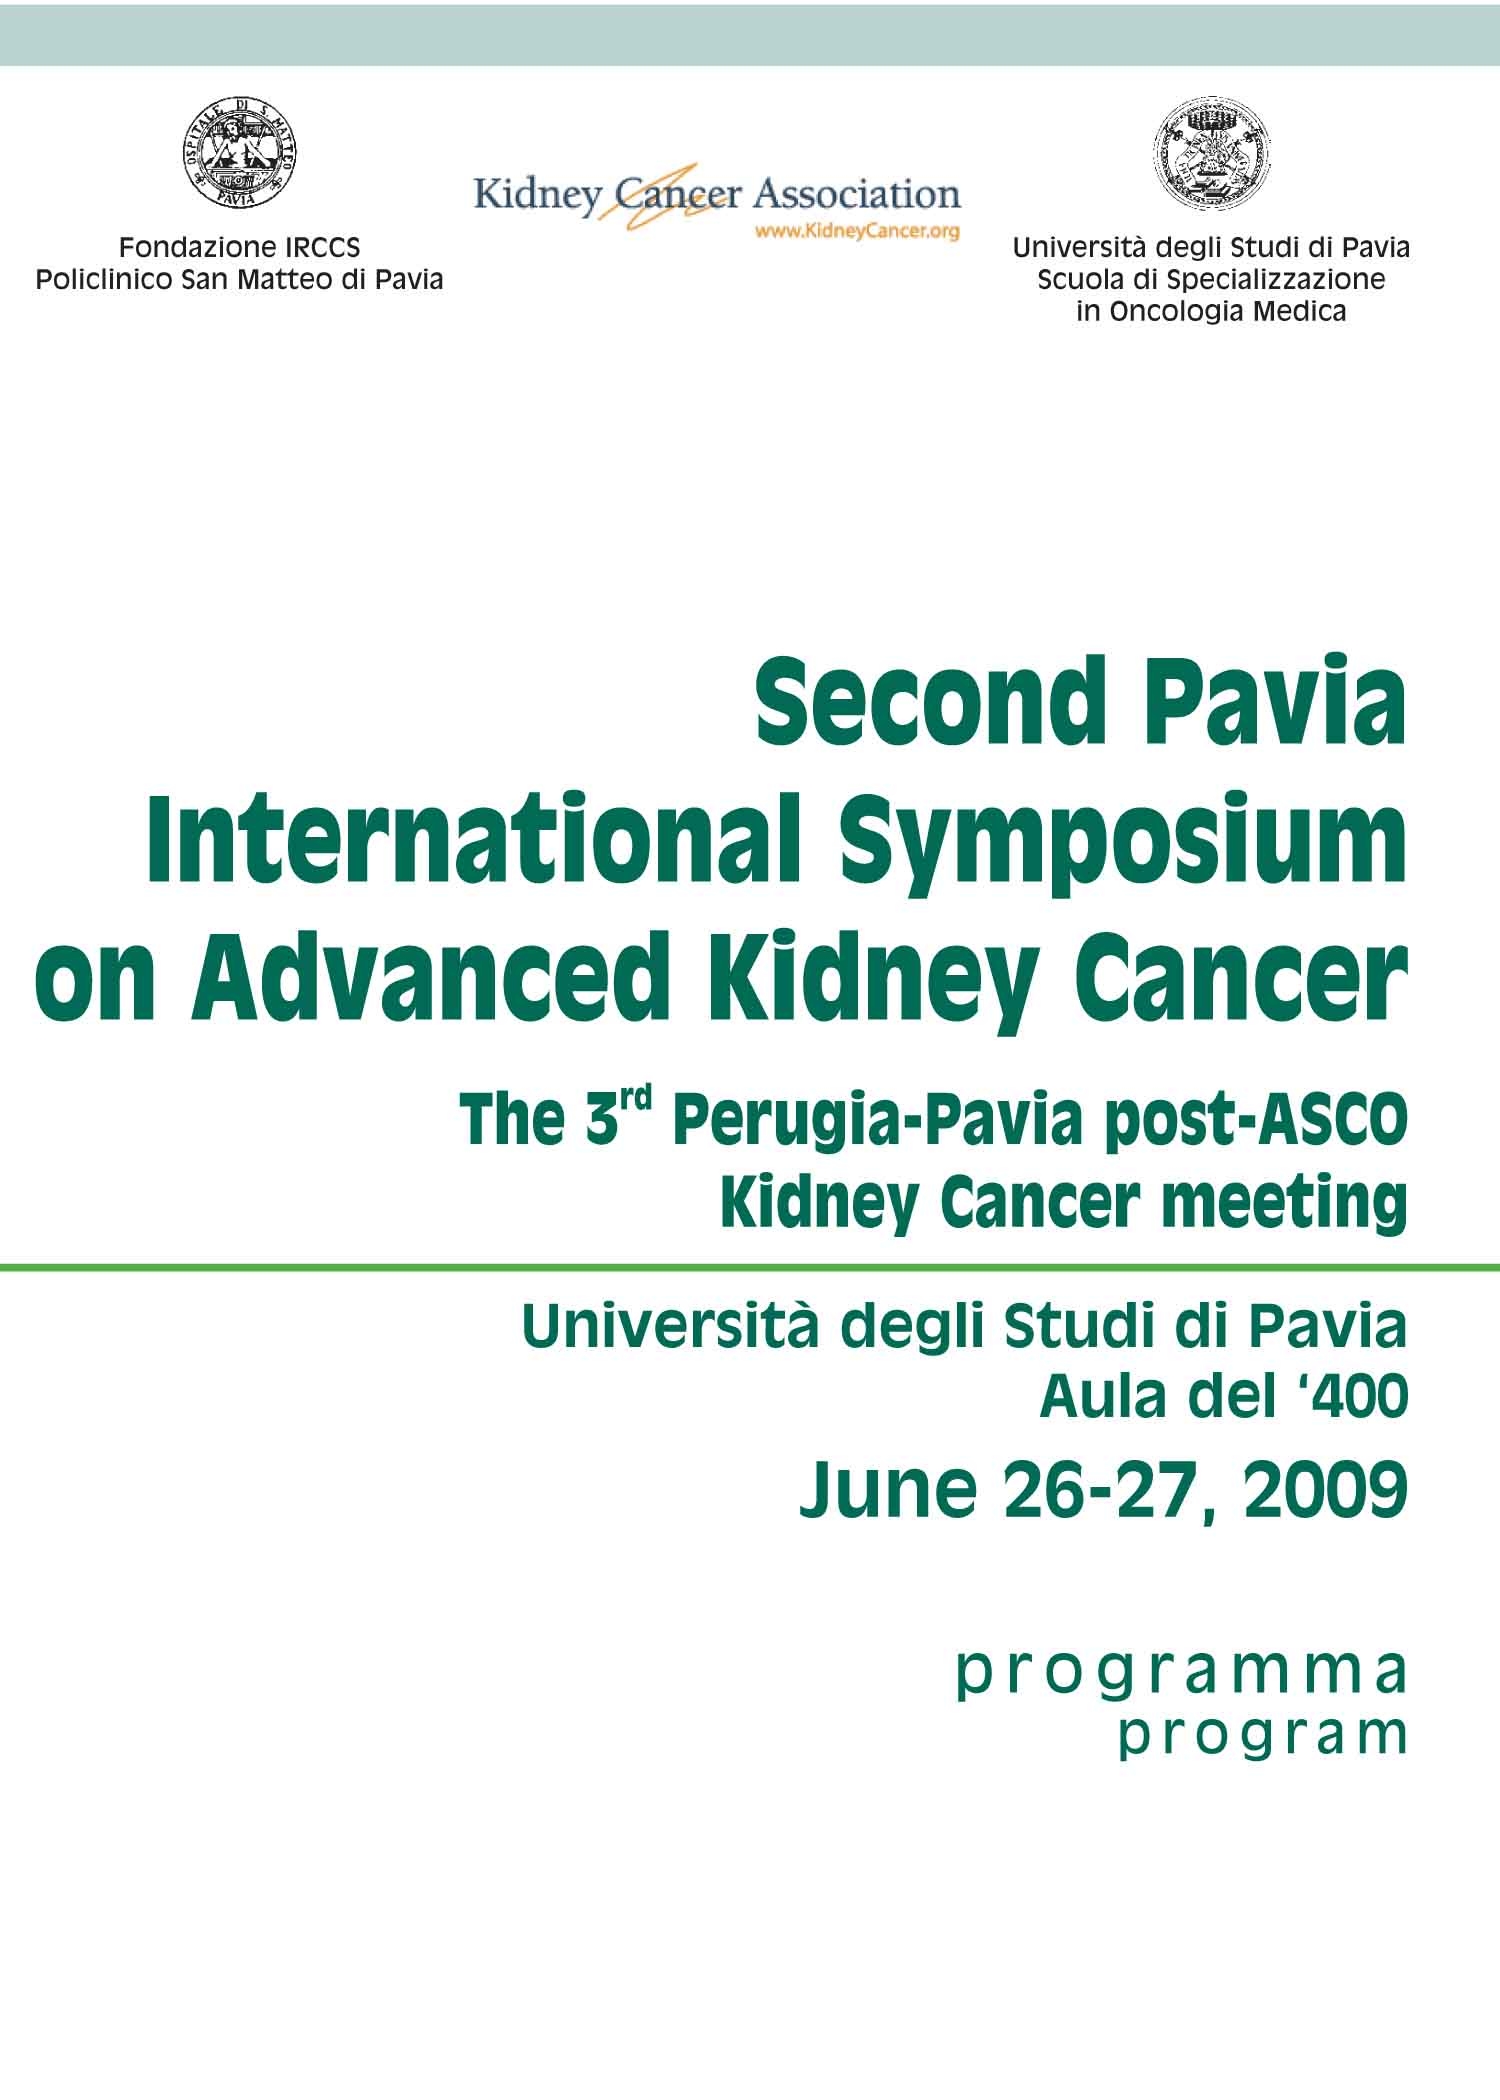 Second Pavia International Symposium on Advanced Kidney Cancer 2009